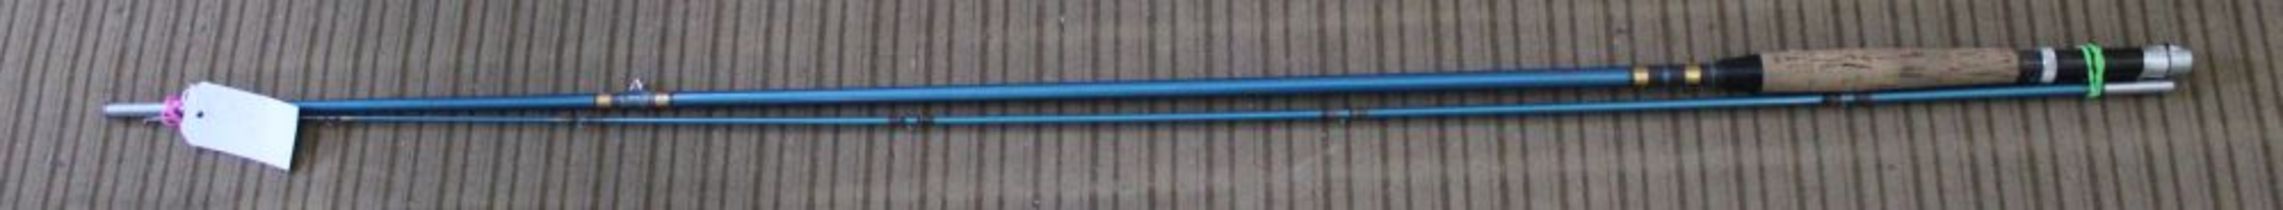 A vintage two piece 8ft glass fibre fly rod